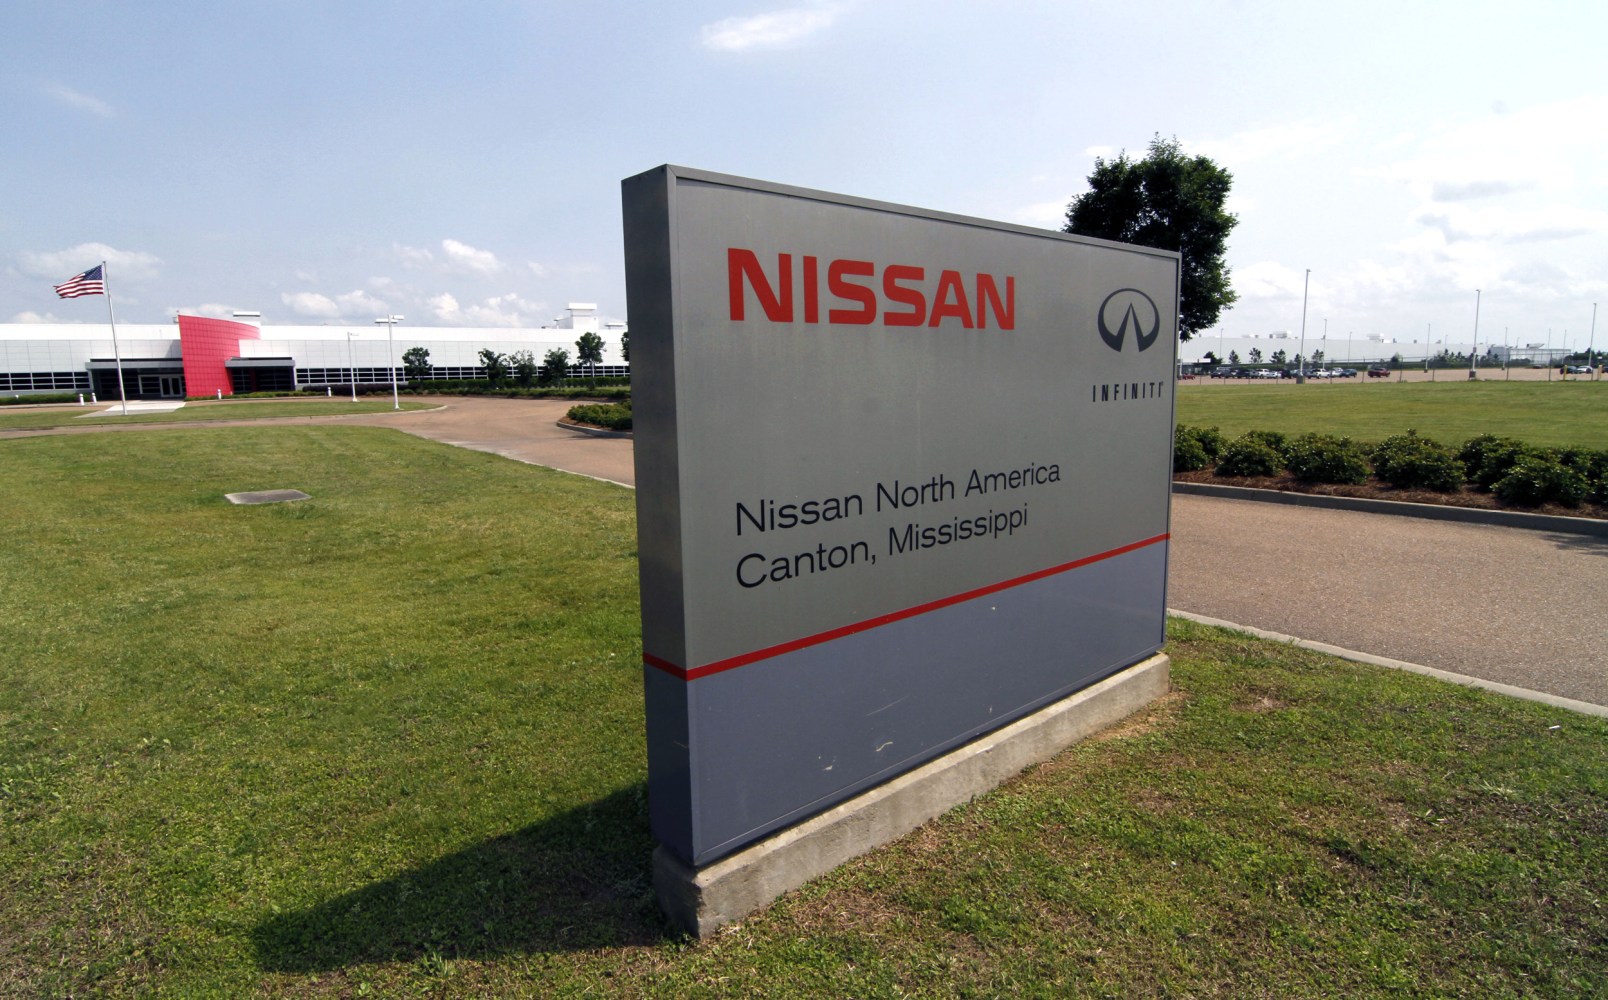 Nissan north america canton ms jobs